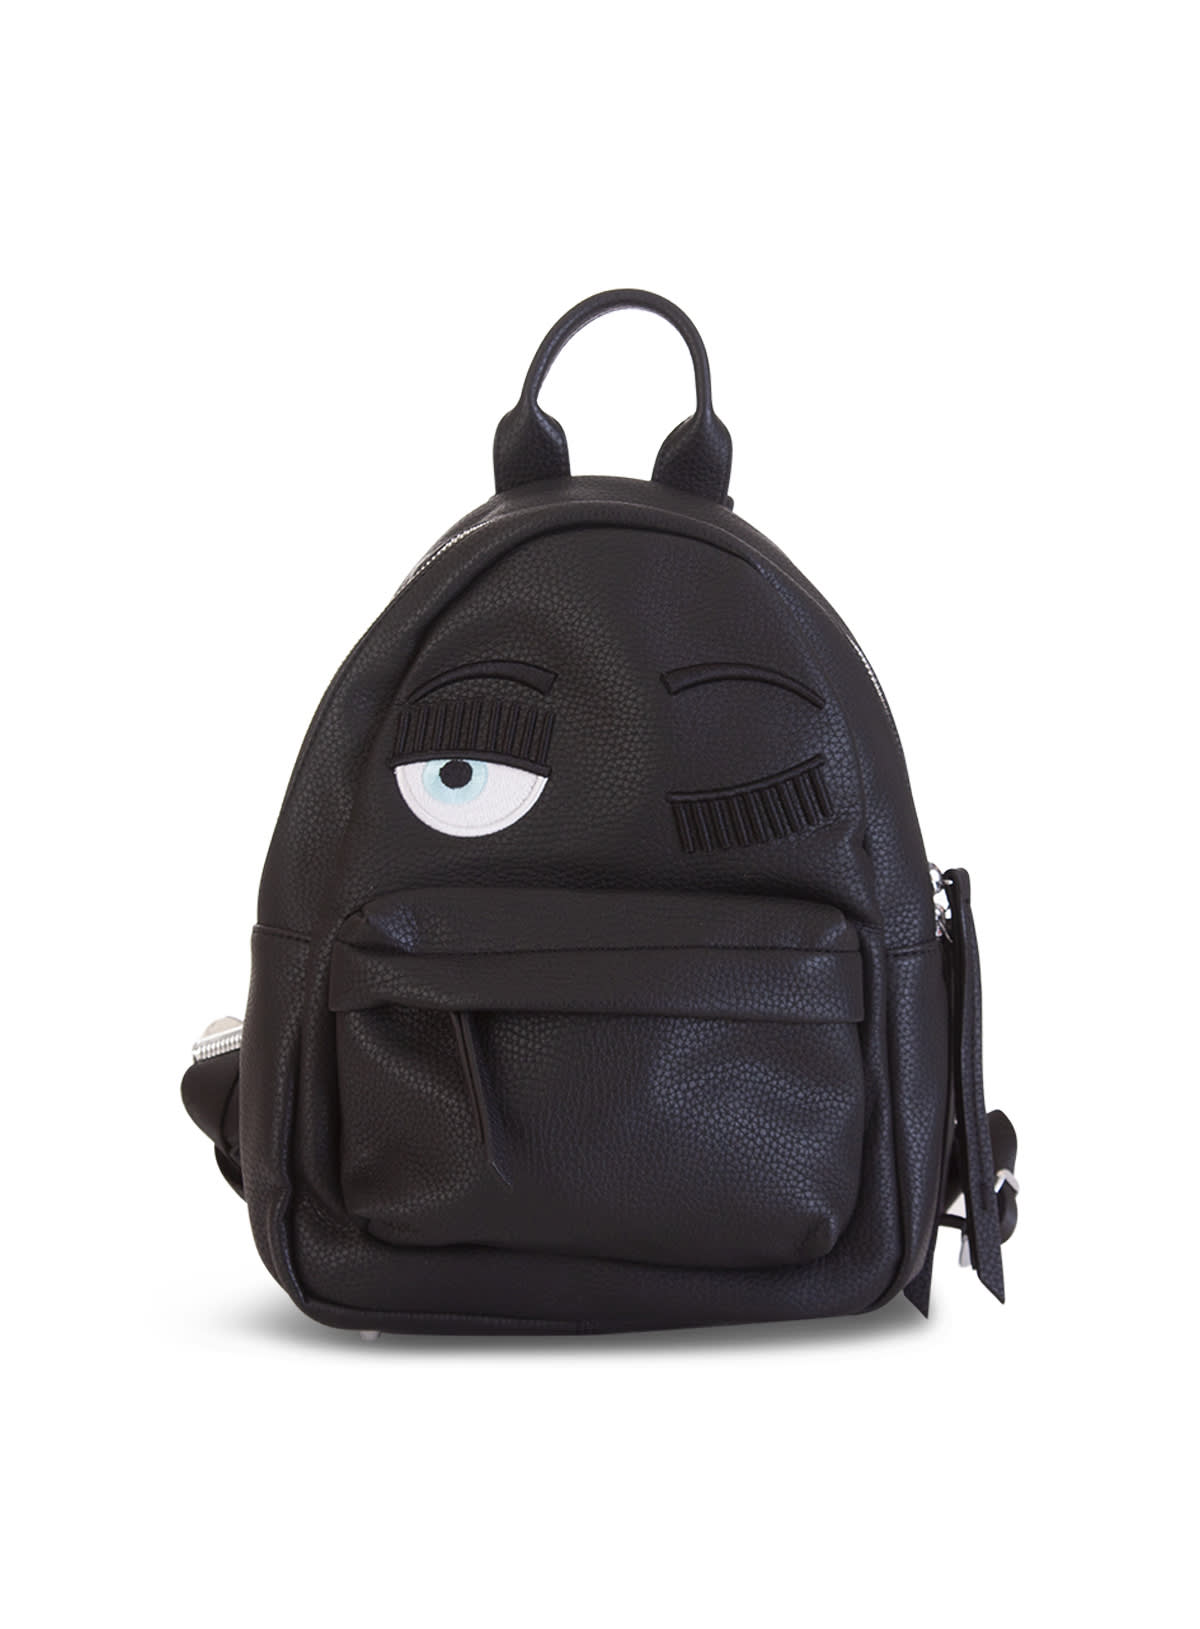 Chiara Ferragni Eye Design Backpack